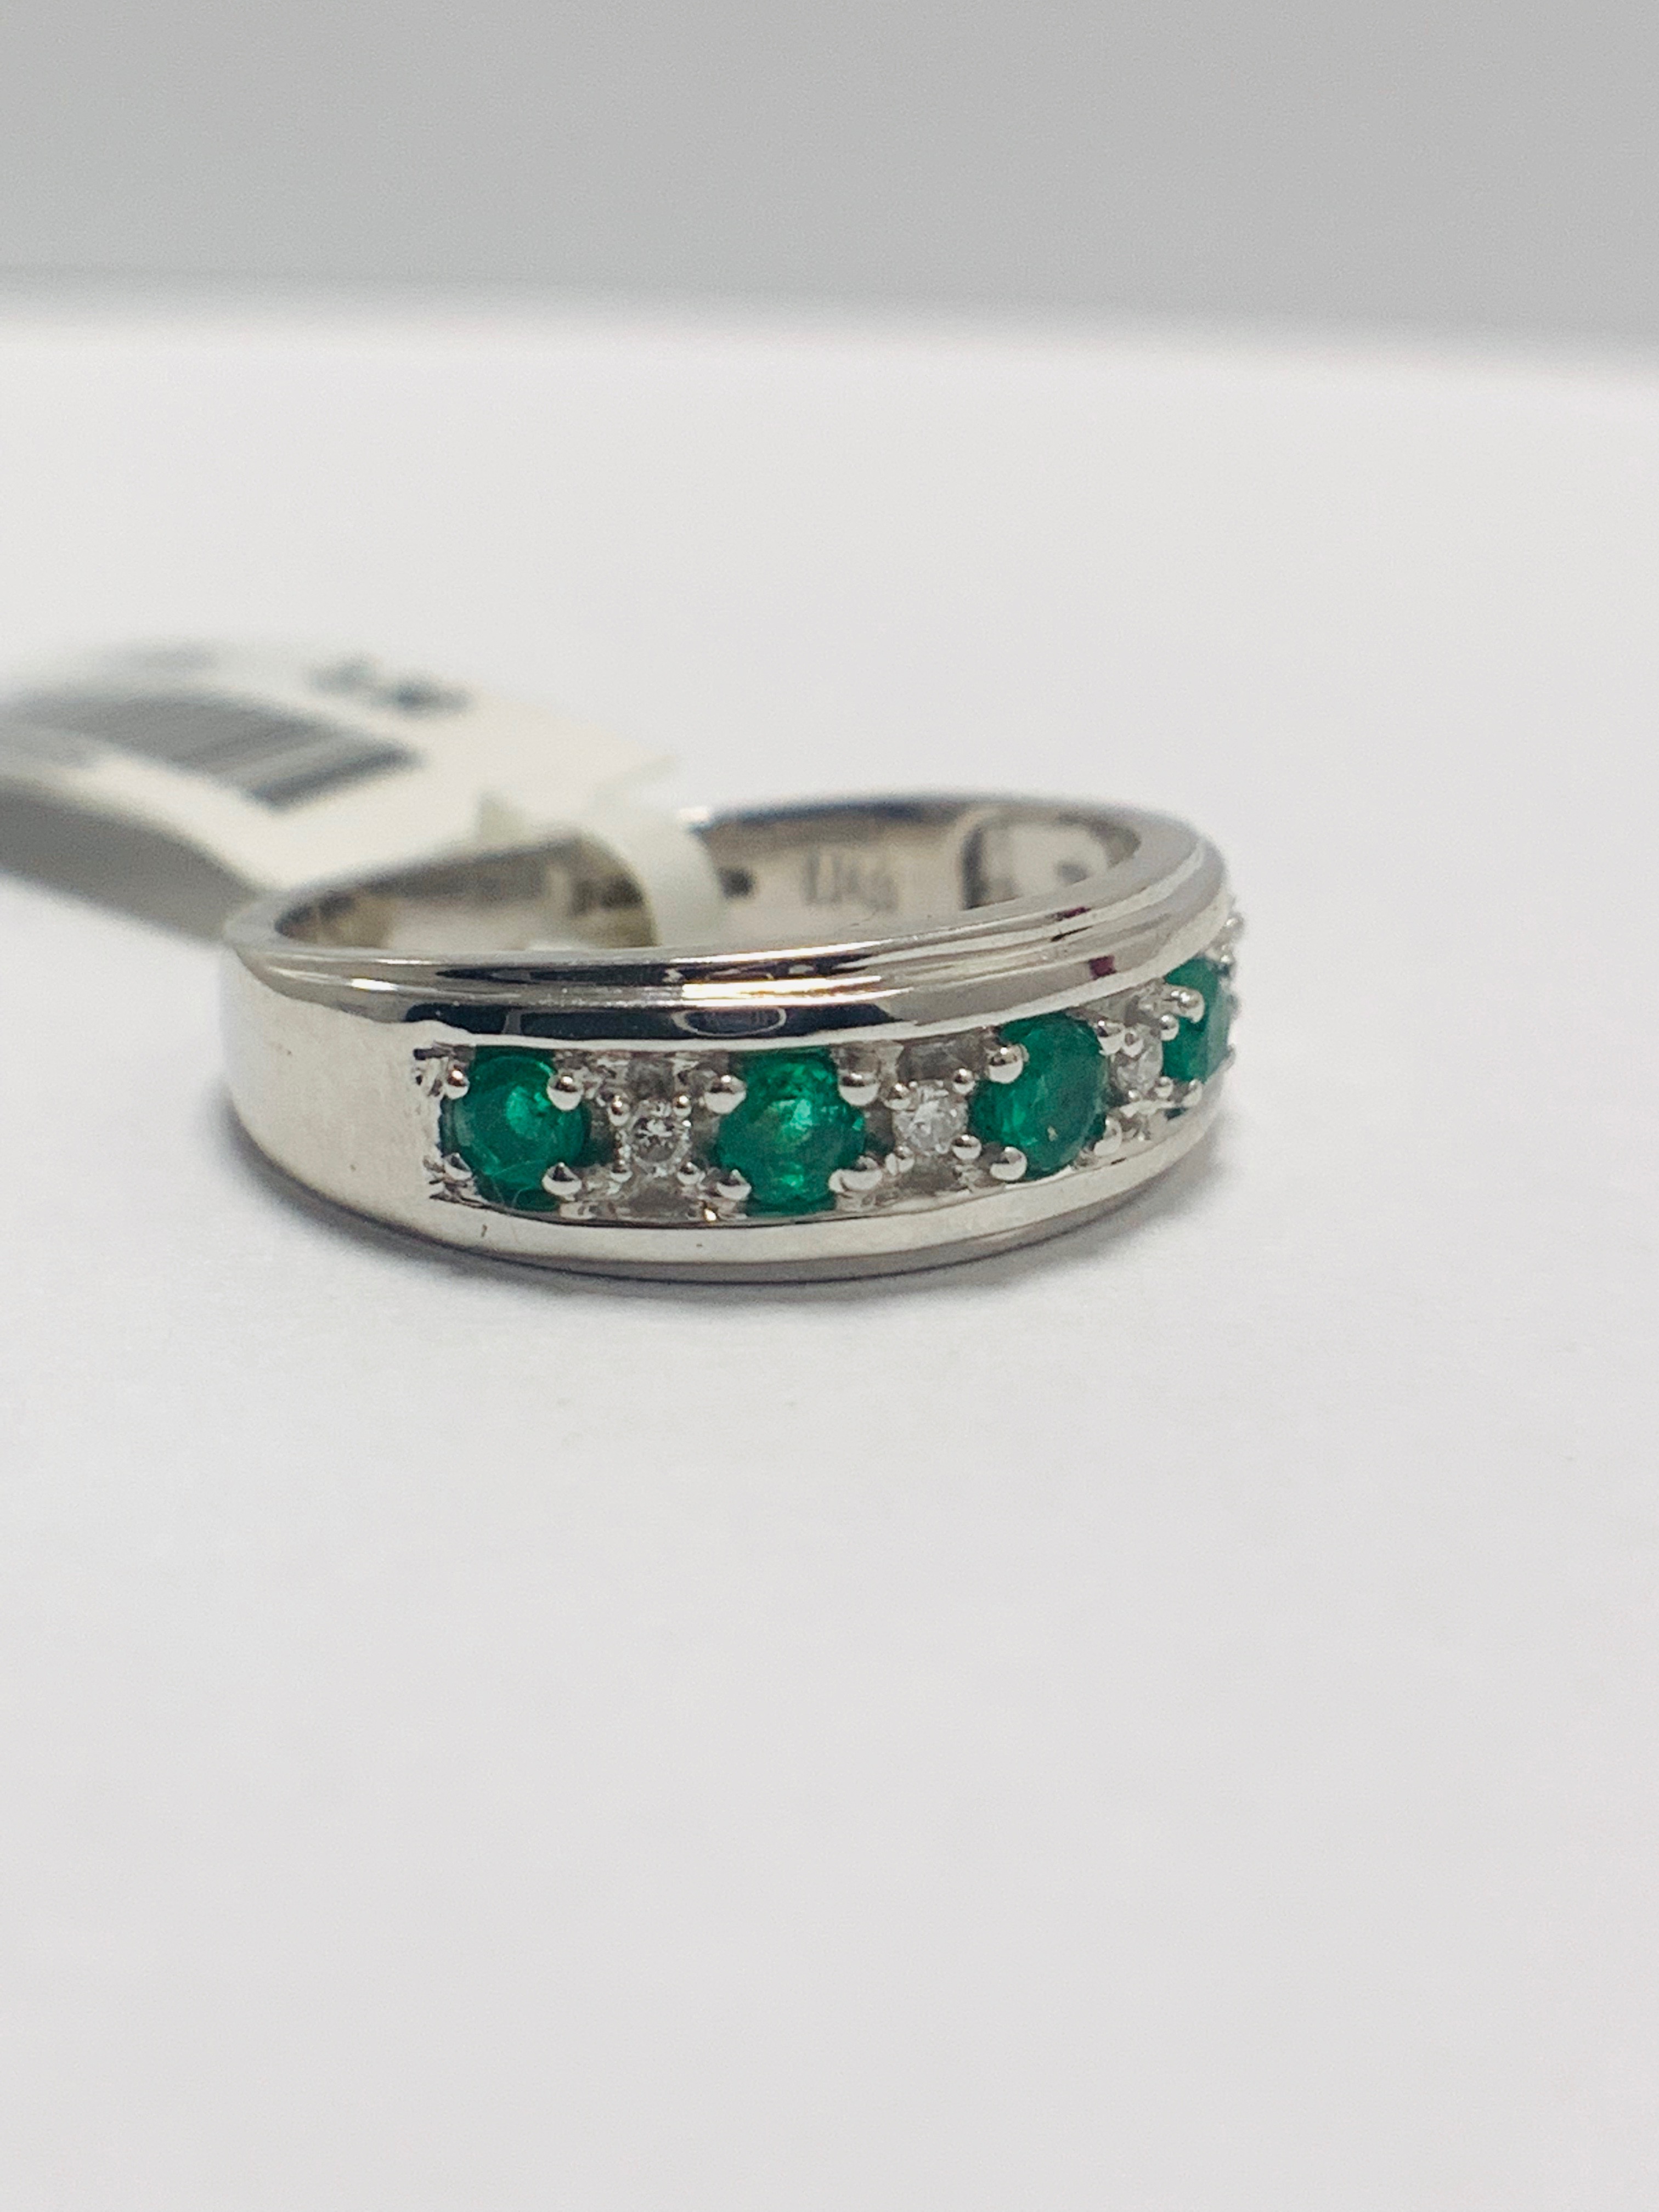 9ct white gold emerald diamond band ring. - Image 2 of 8